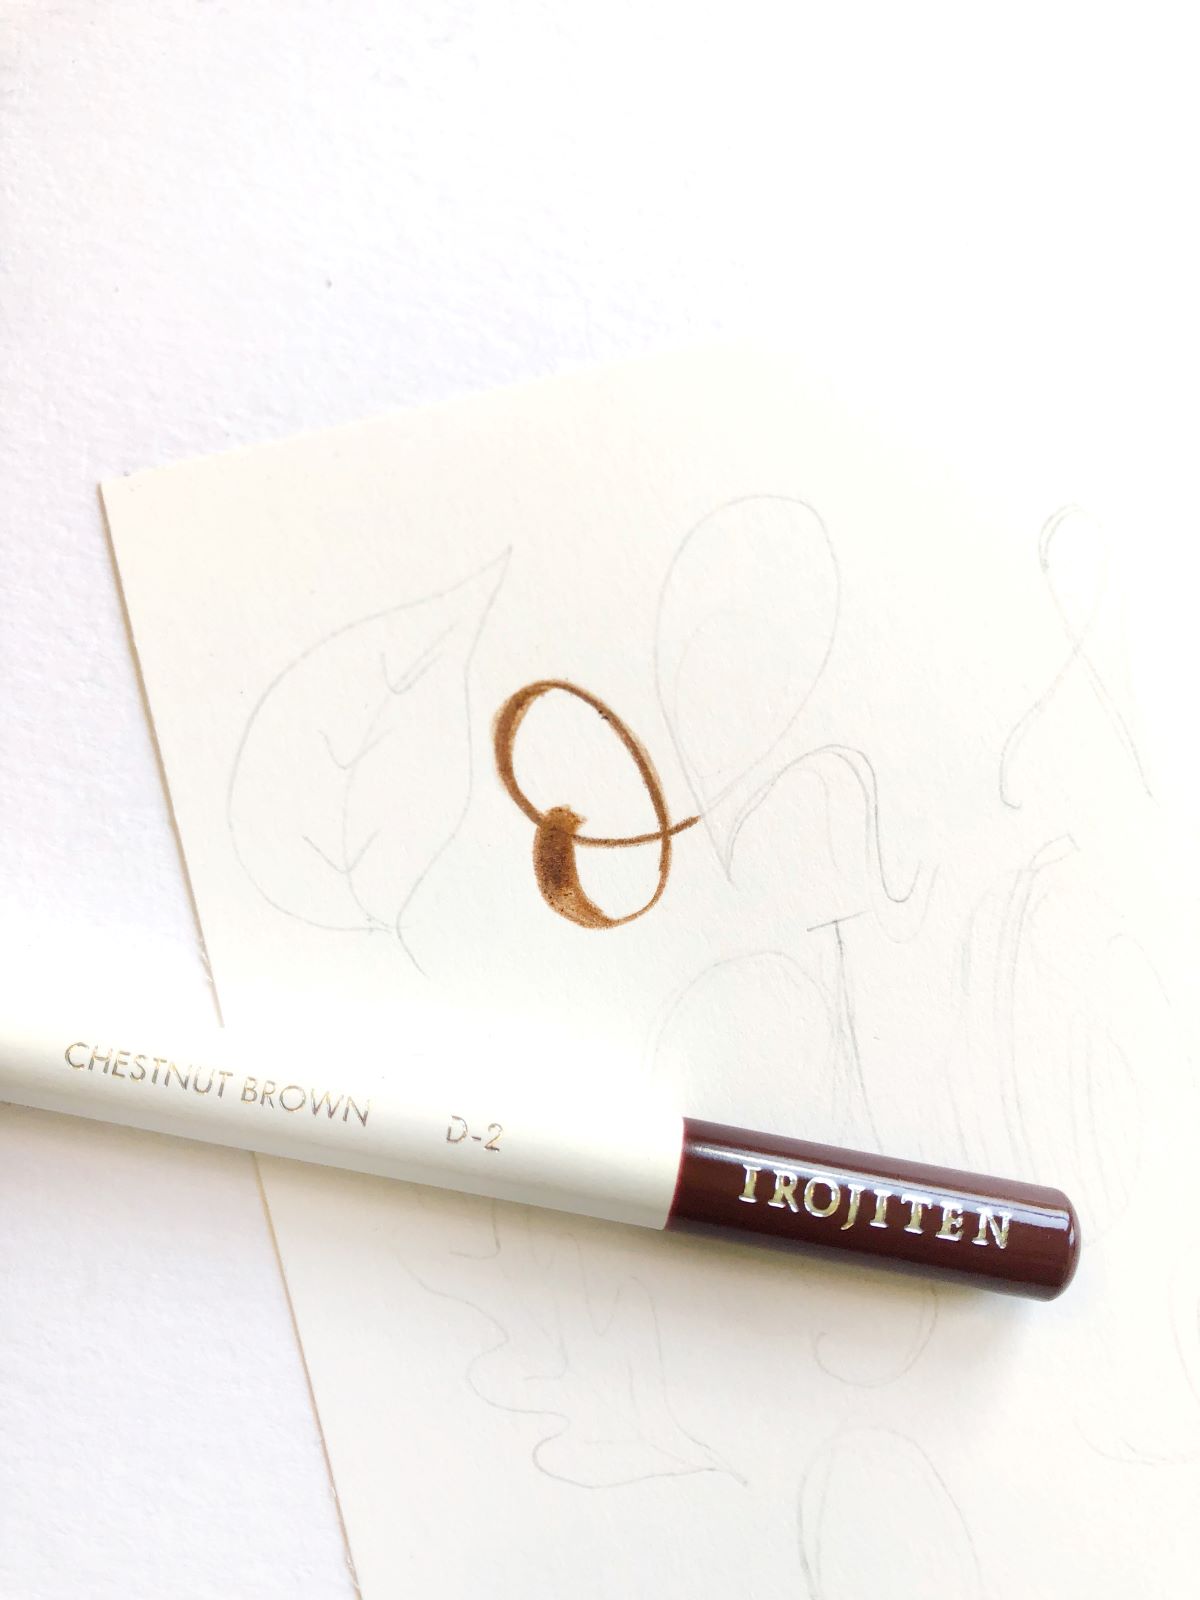 Letter An Autumn Pun with Tombow Irojiten Pencils and @aheartenedcalling #tombow #irojiten